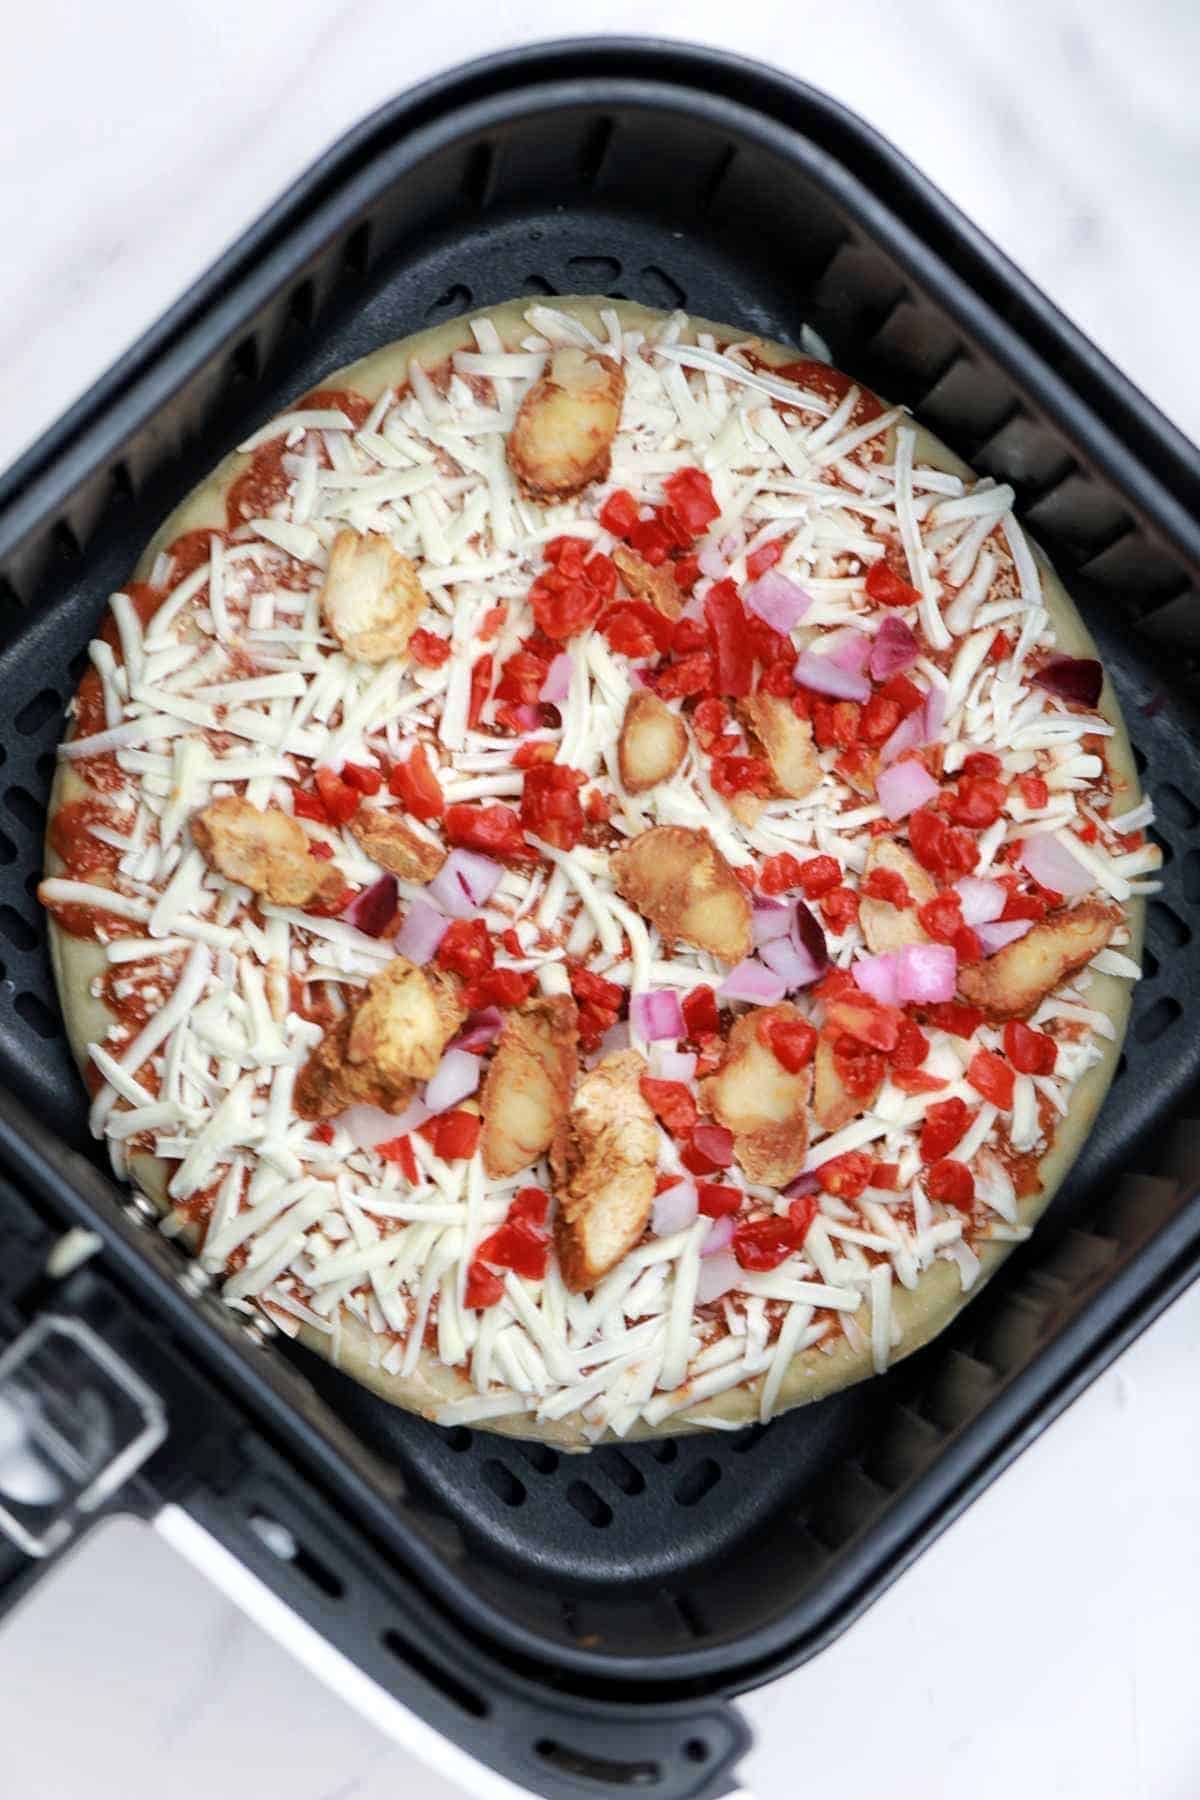 frozen pizza in air fryer basket.